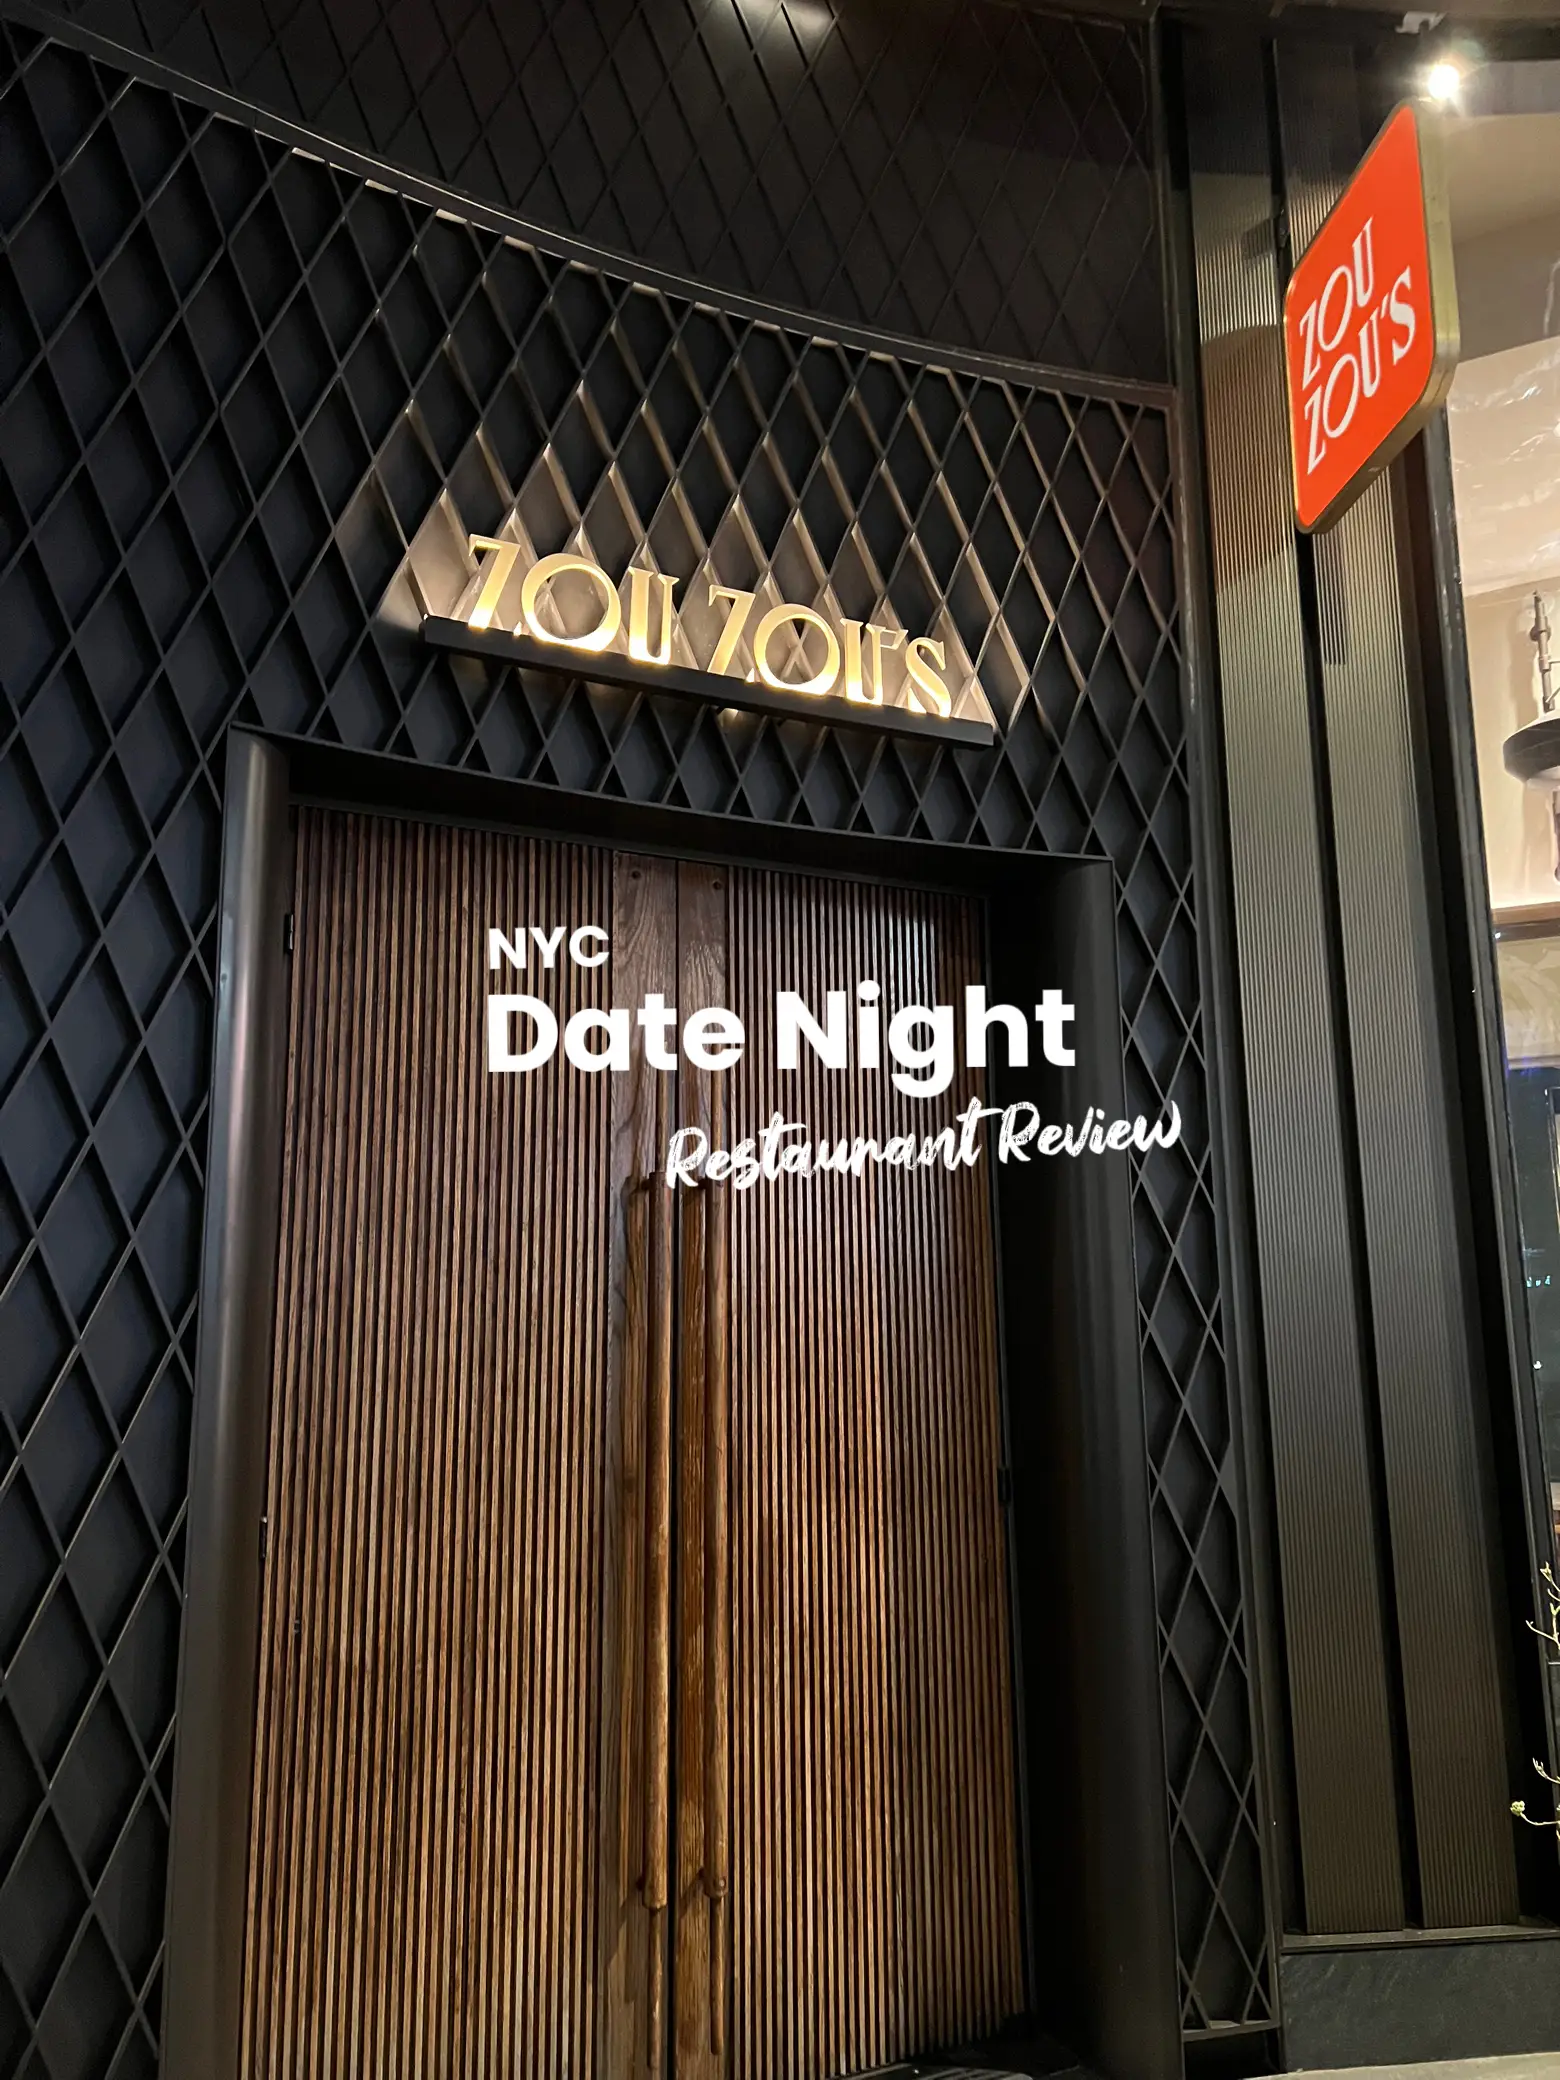  A restaurant with a date night menu.